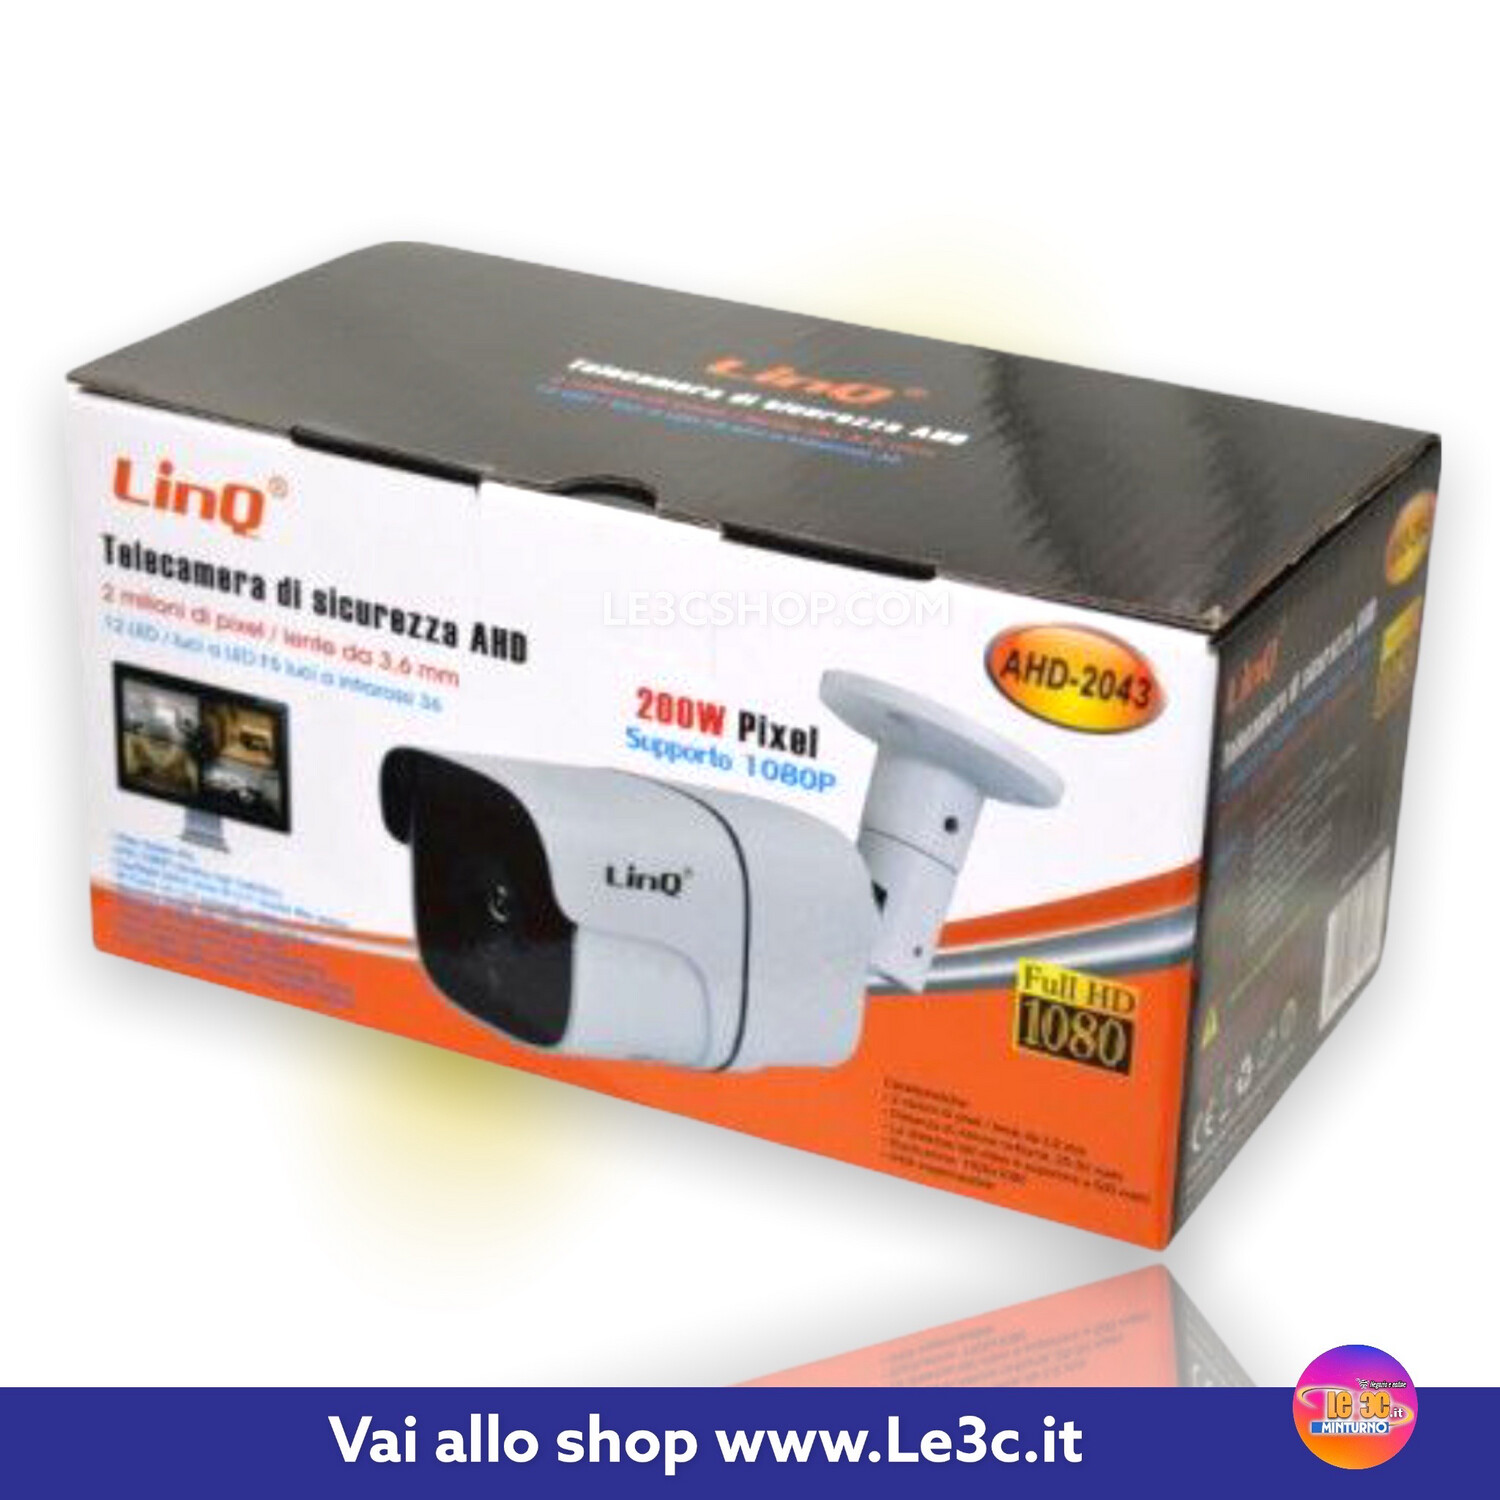 Telecamera Poe Linq 2 mp 1080P 